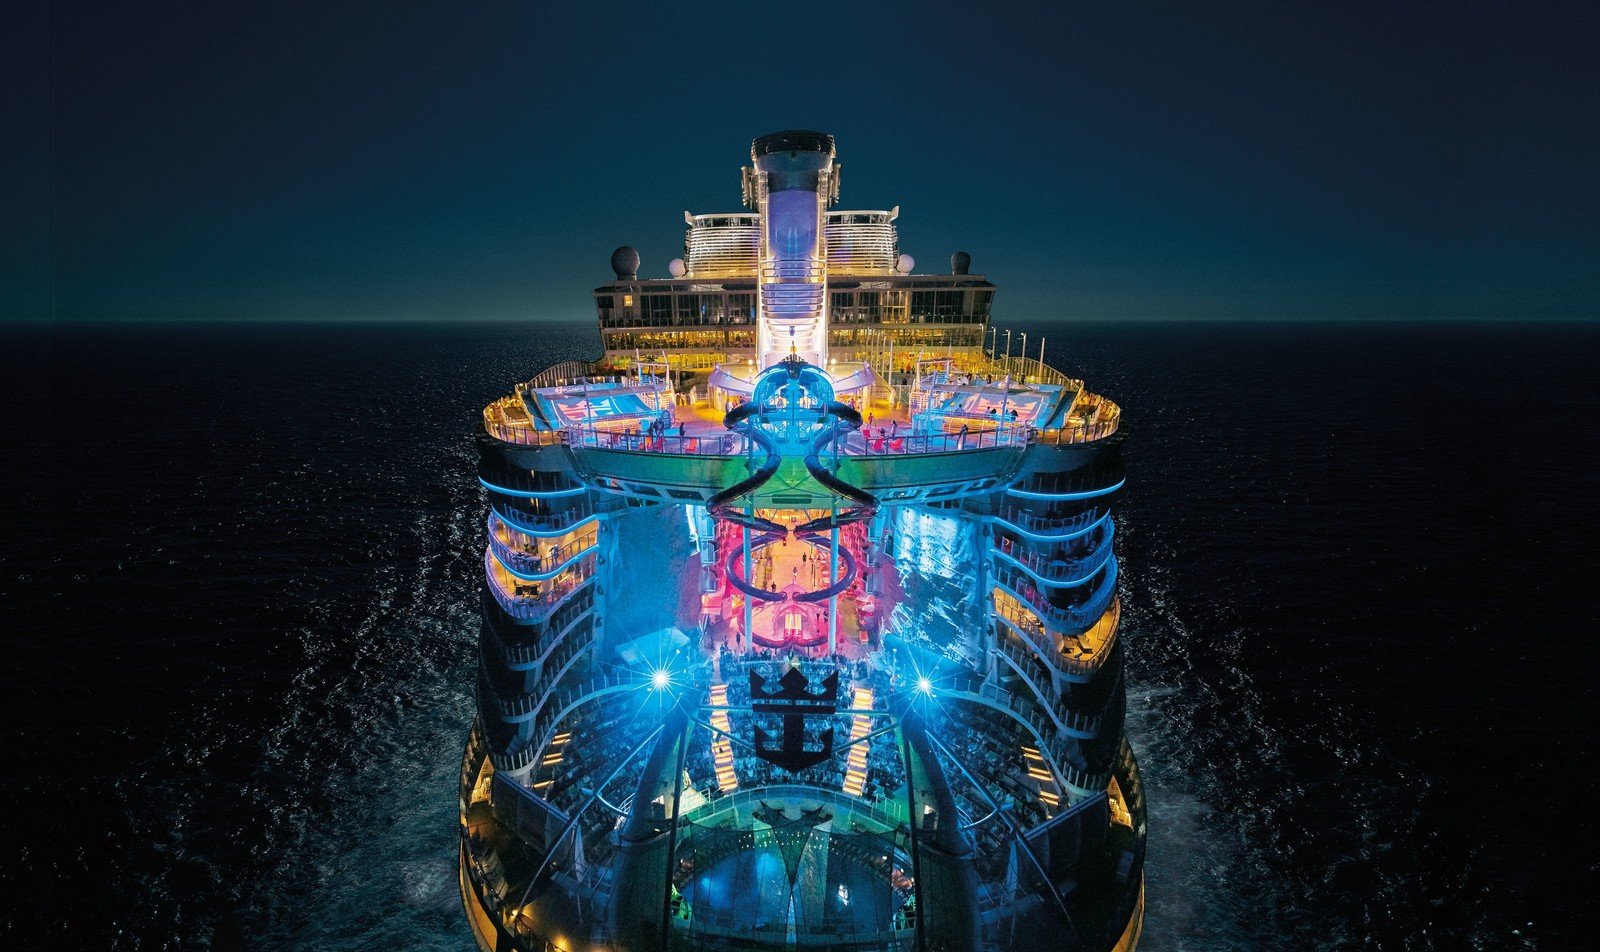 4 futuristic ideas Royal Caribbean has for cruise ships | Royal Caribbean Blog